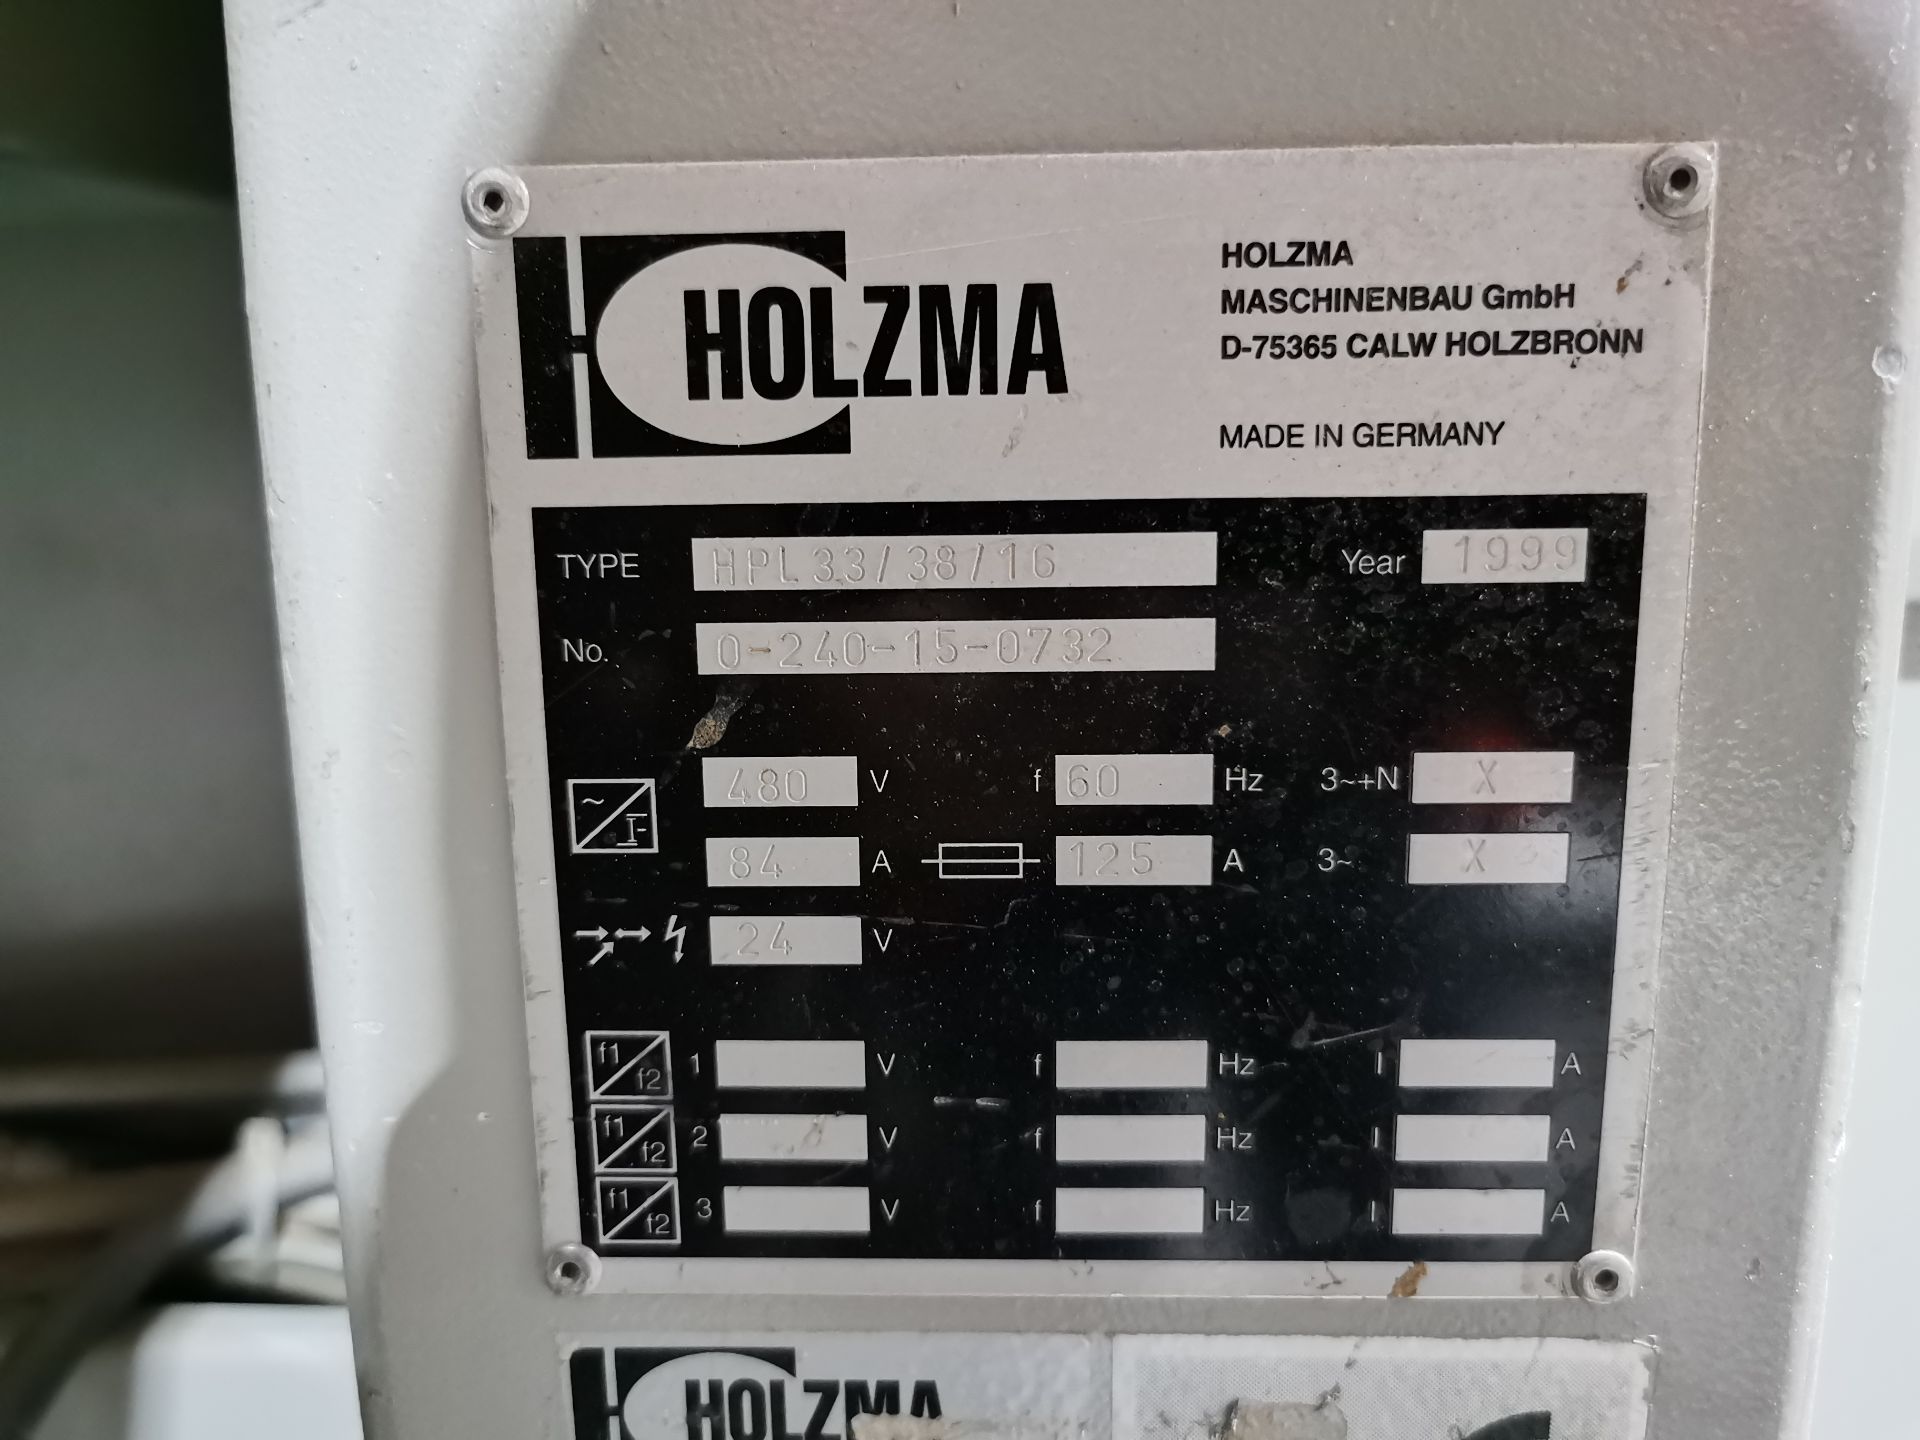 Holzma Saw Machine, Model HPL33/38/16, S/N 0-240-15-0732, Year 1999, 480 V / 60 Hz, 125 AMPS - Image 38 of 39